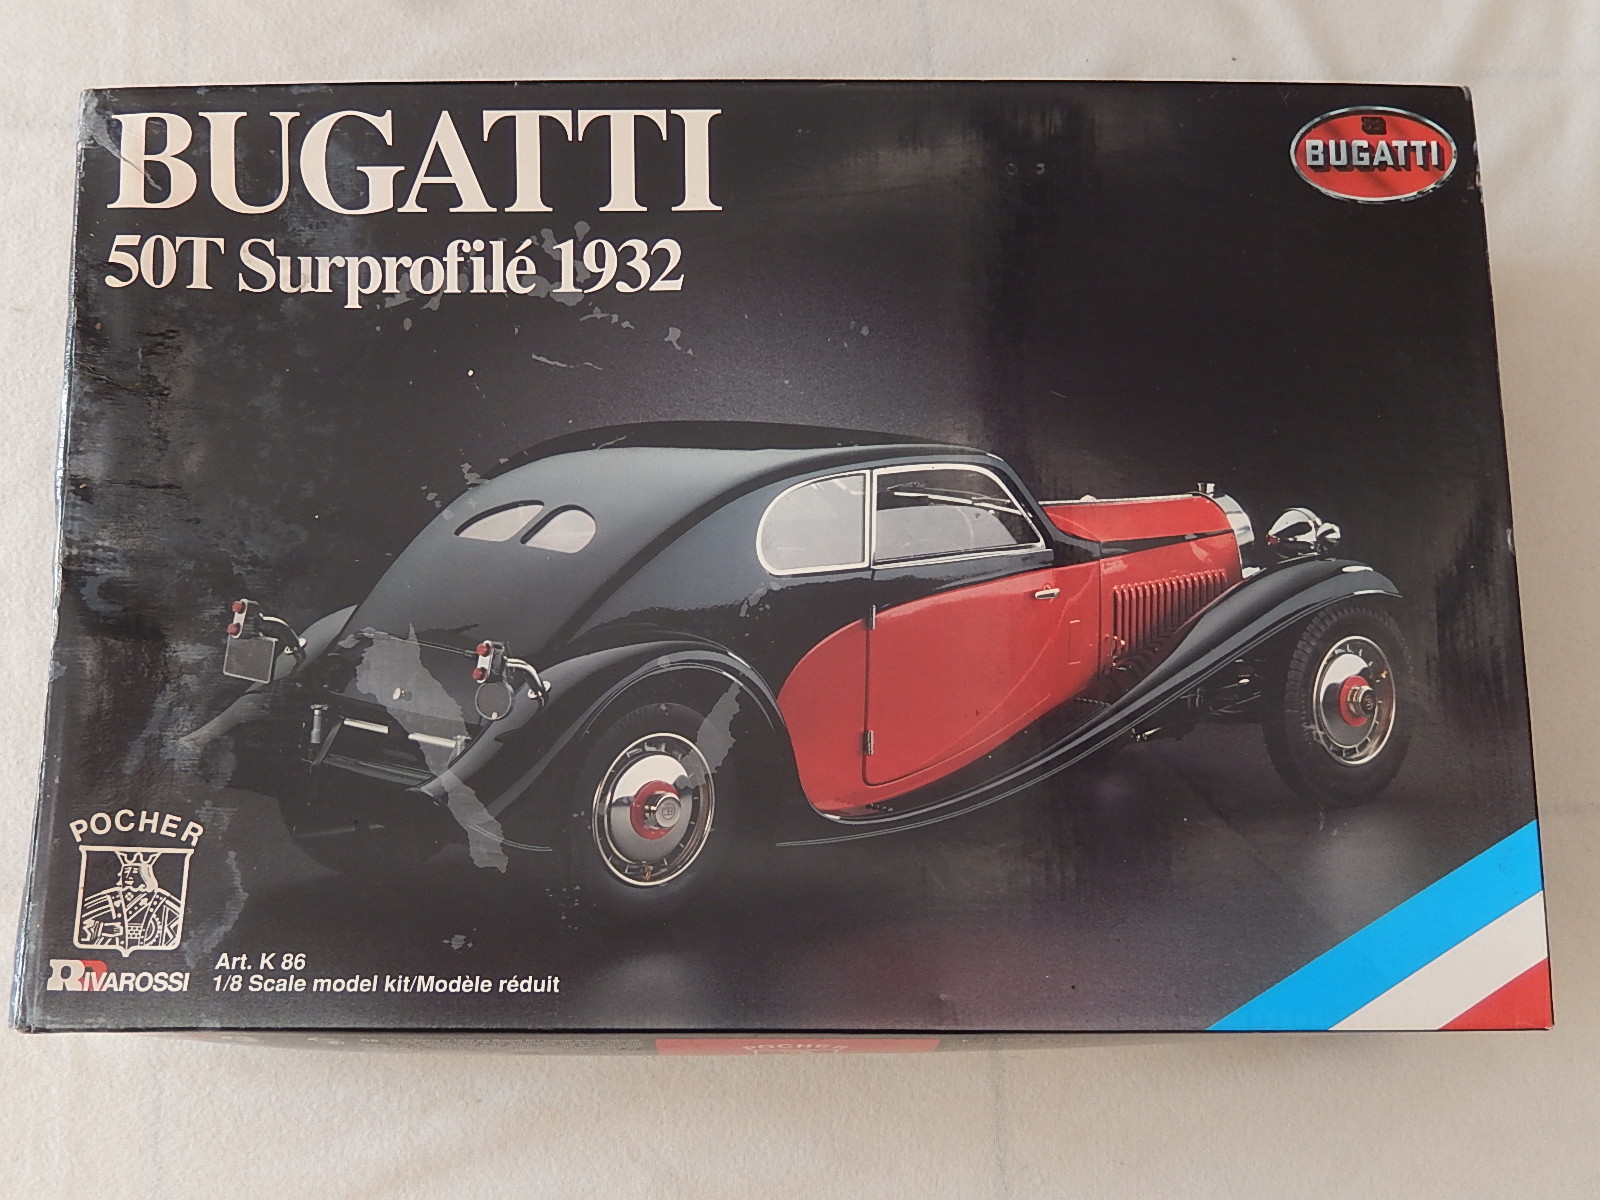 Pocher : Kit Bugatti T50 superprofile 1932 --> SOLD